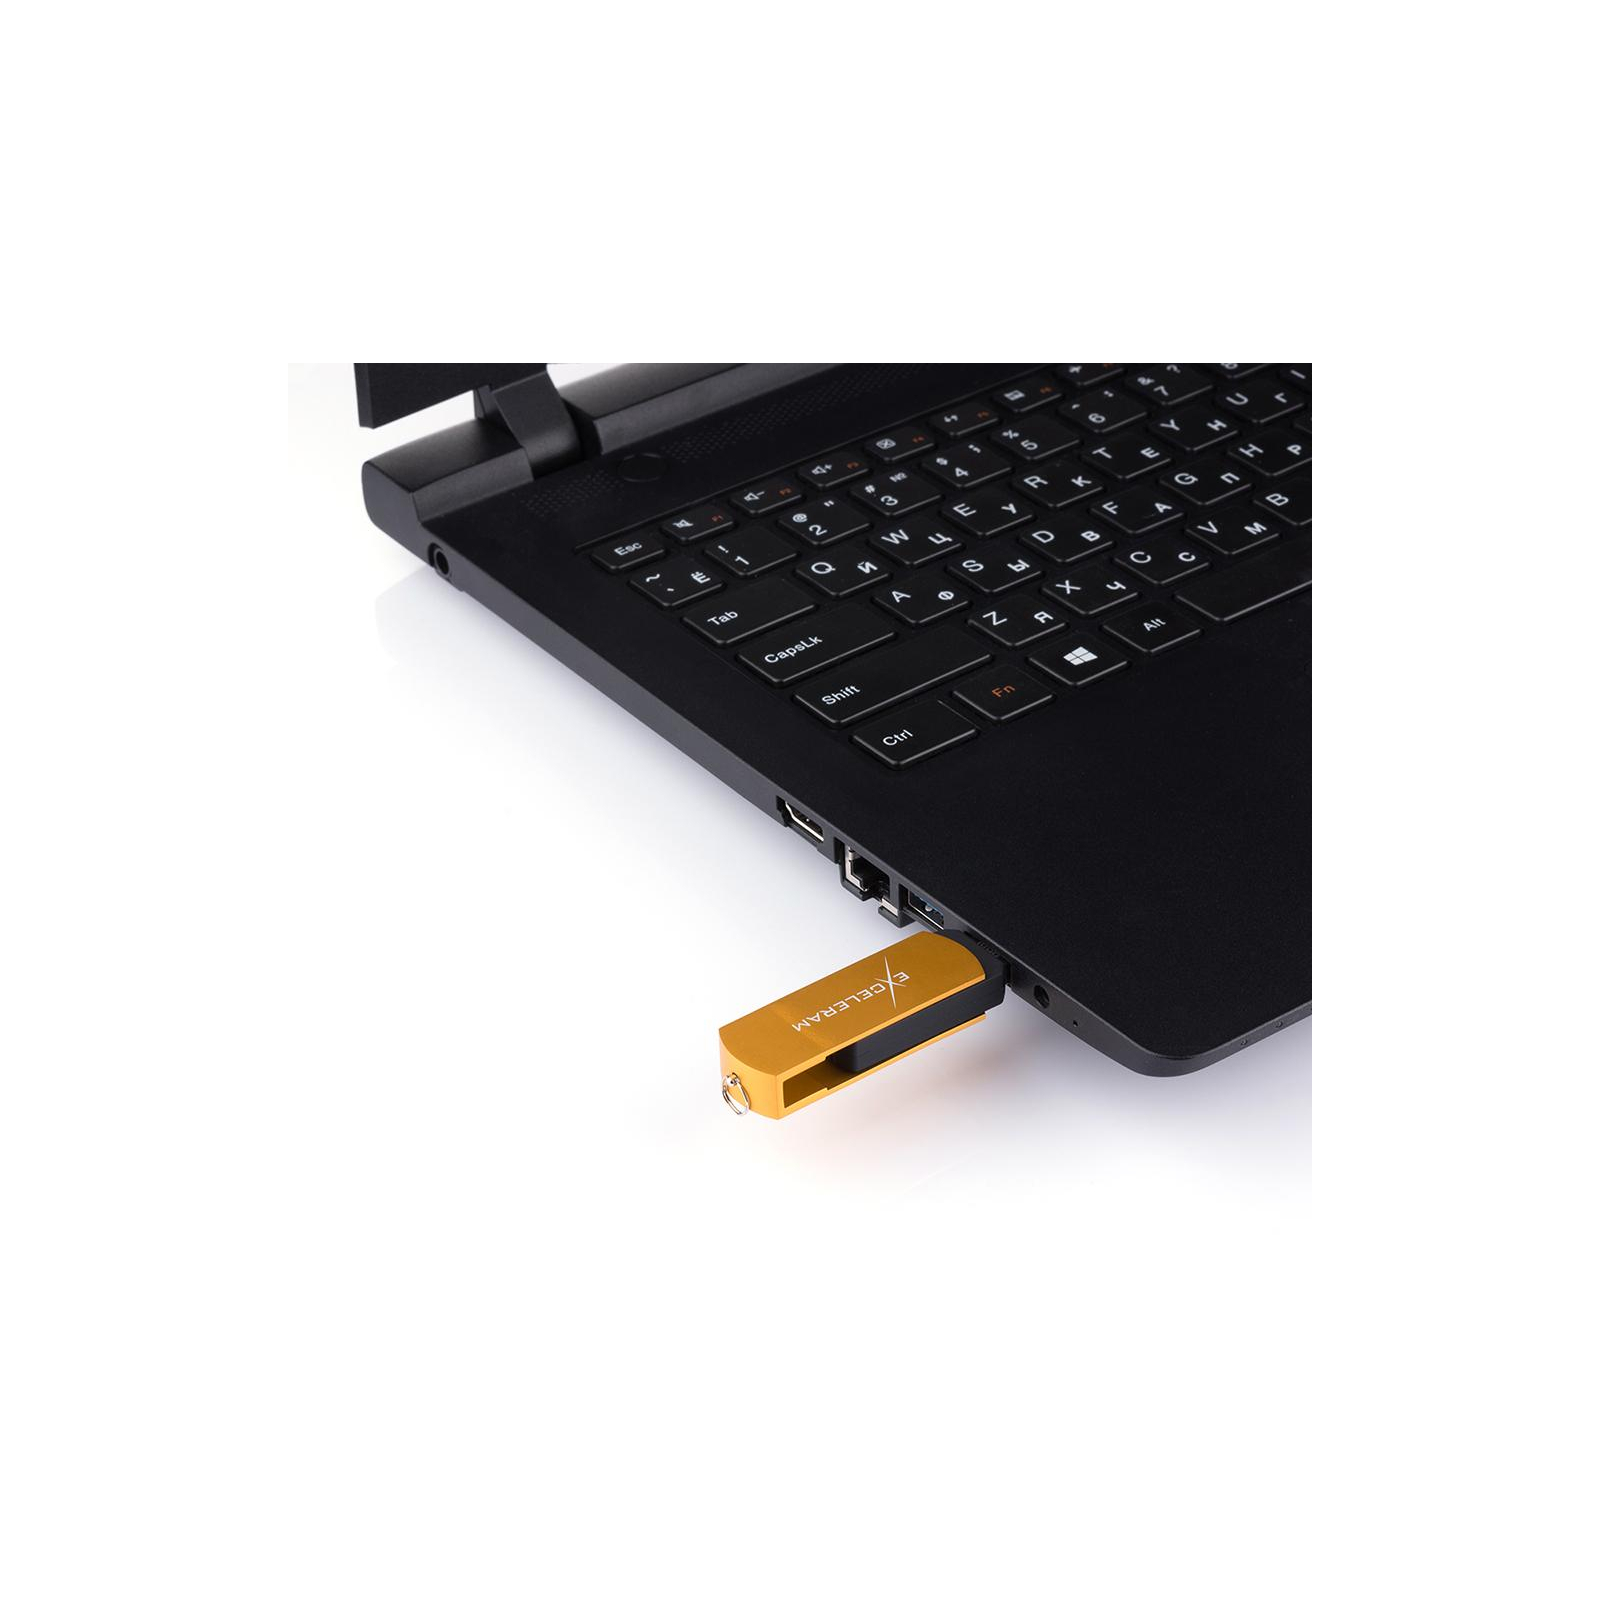 USB флеш накопитель eXceleram 8GB P2 Series Gold/Black USB 2.0 (EXP2U2GOB08) изображение 7